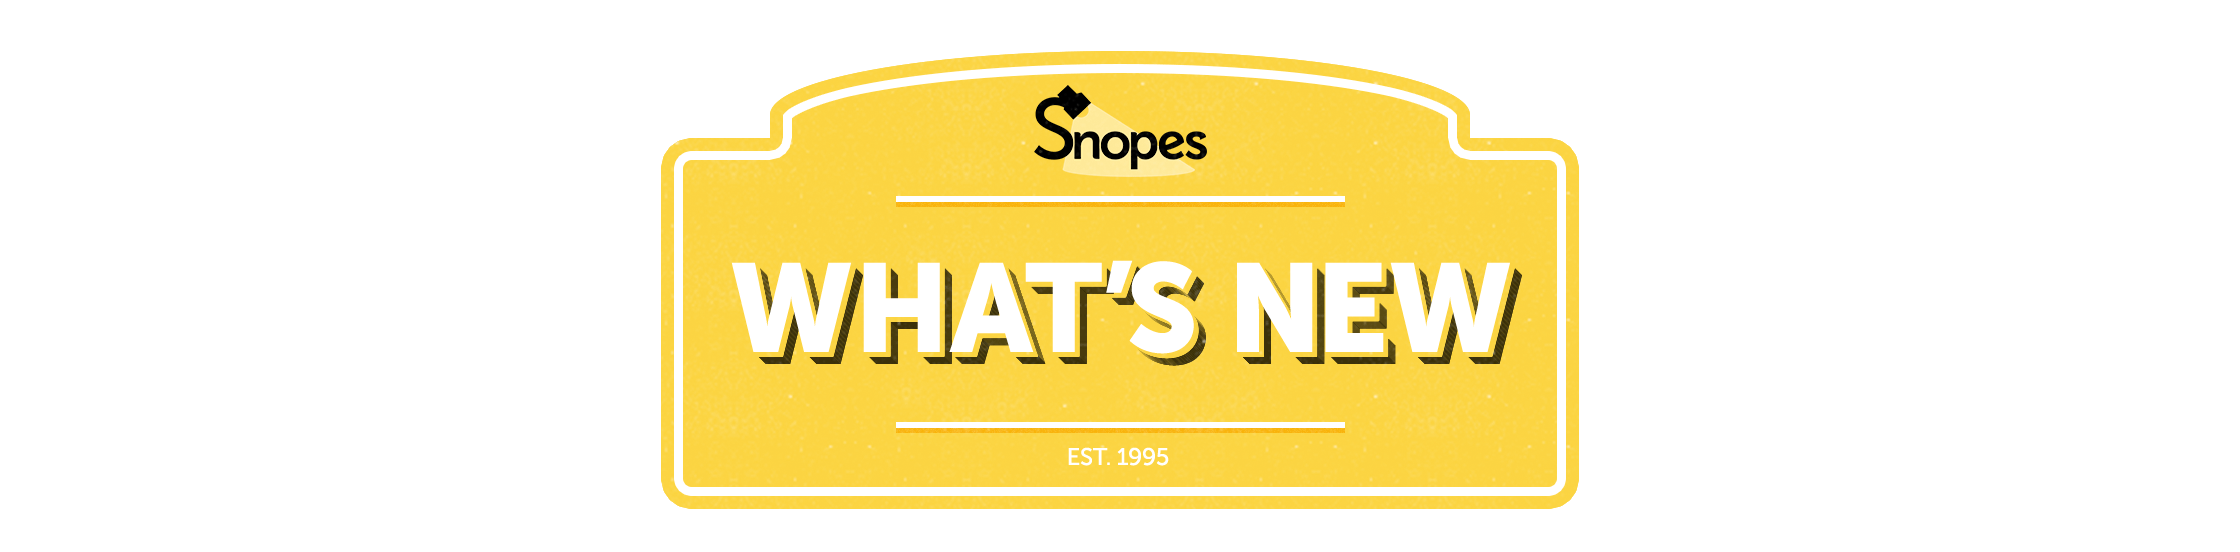 Snopes.com Logo - What's New